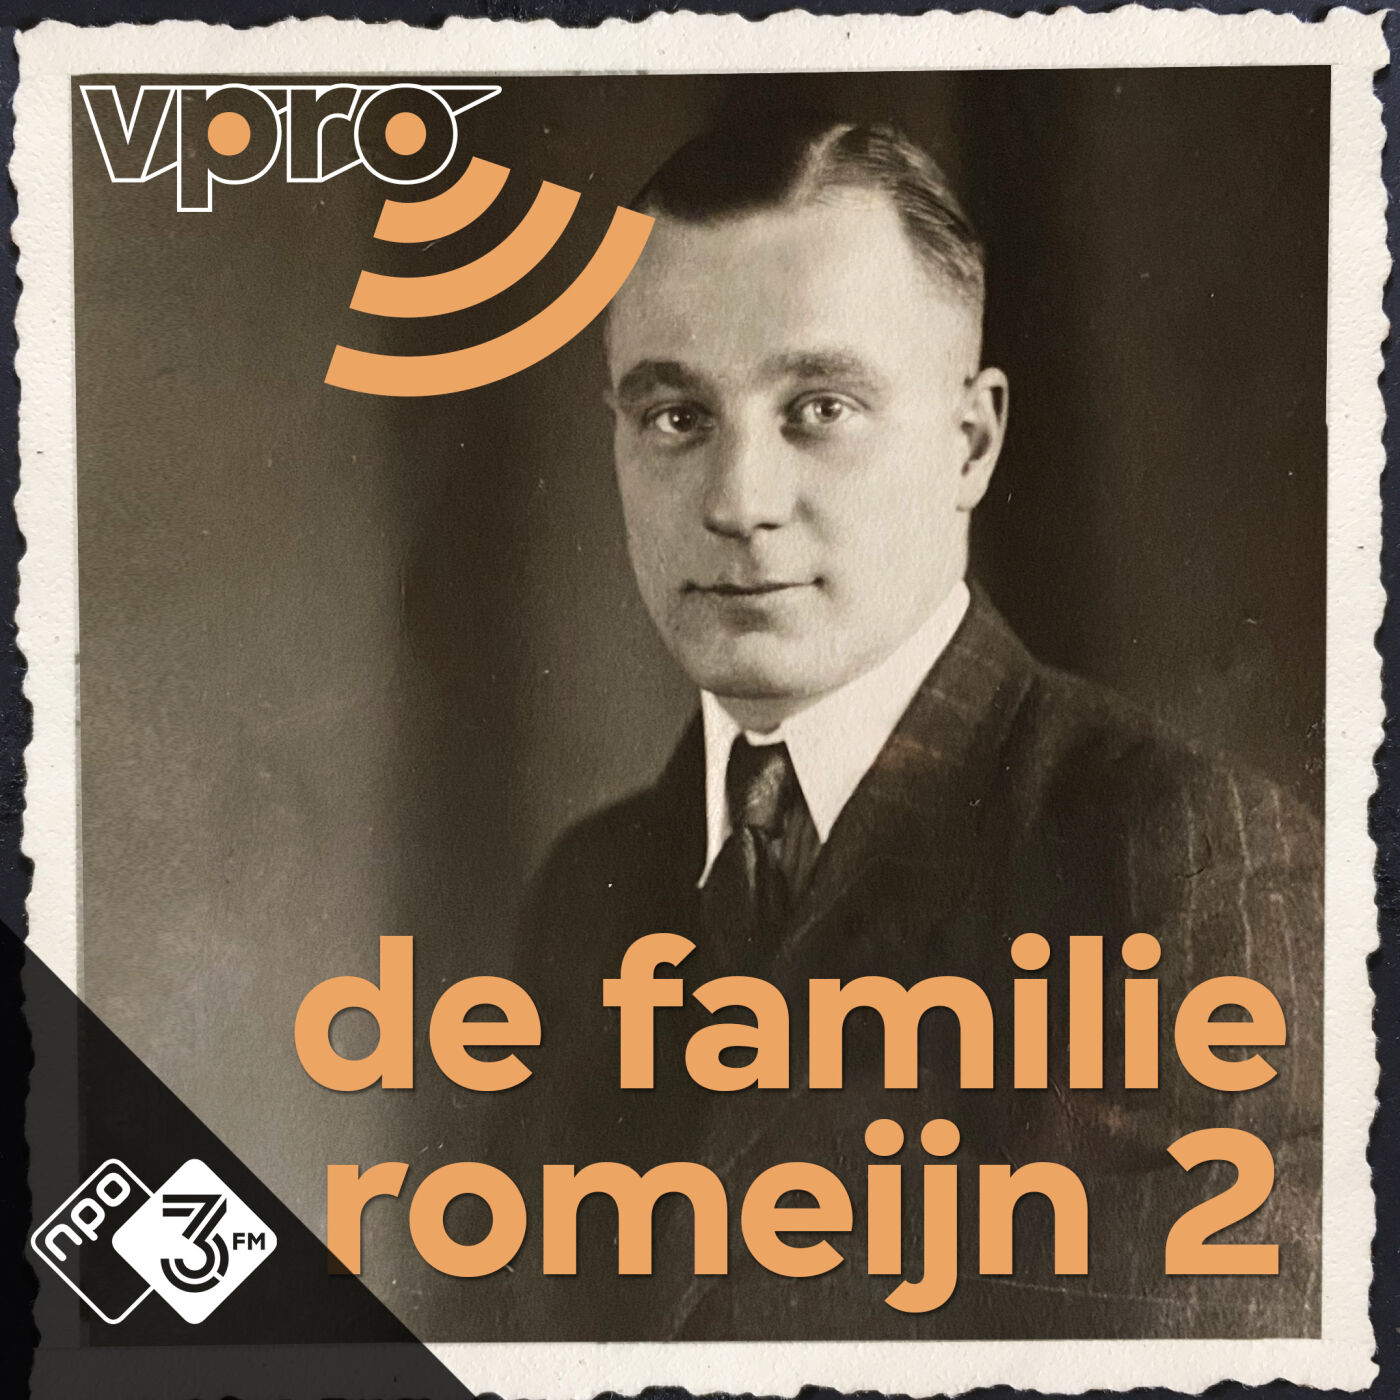 De Familie Romeijn logo